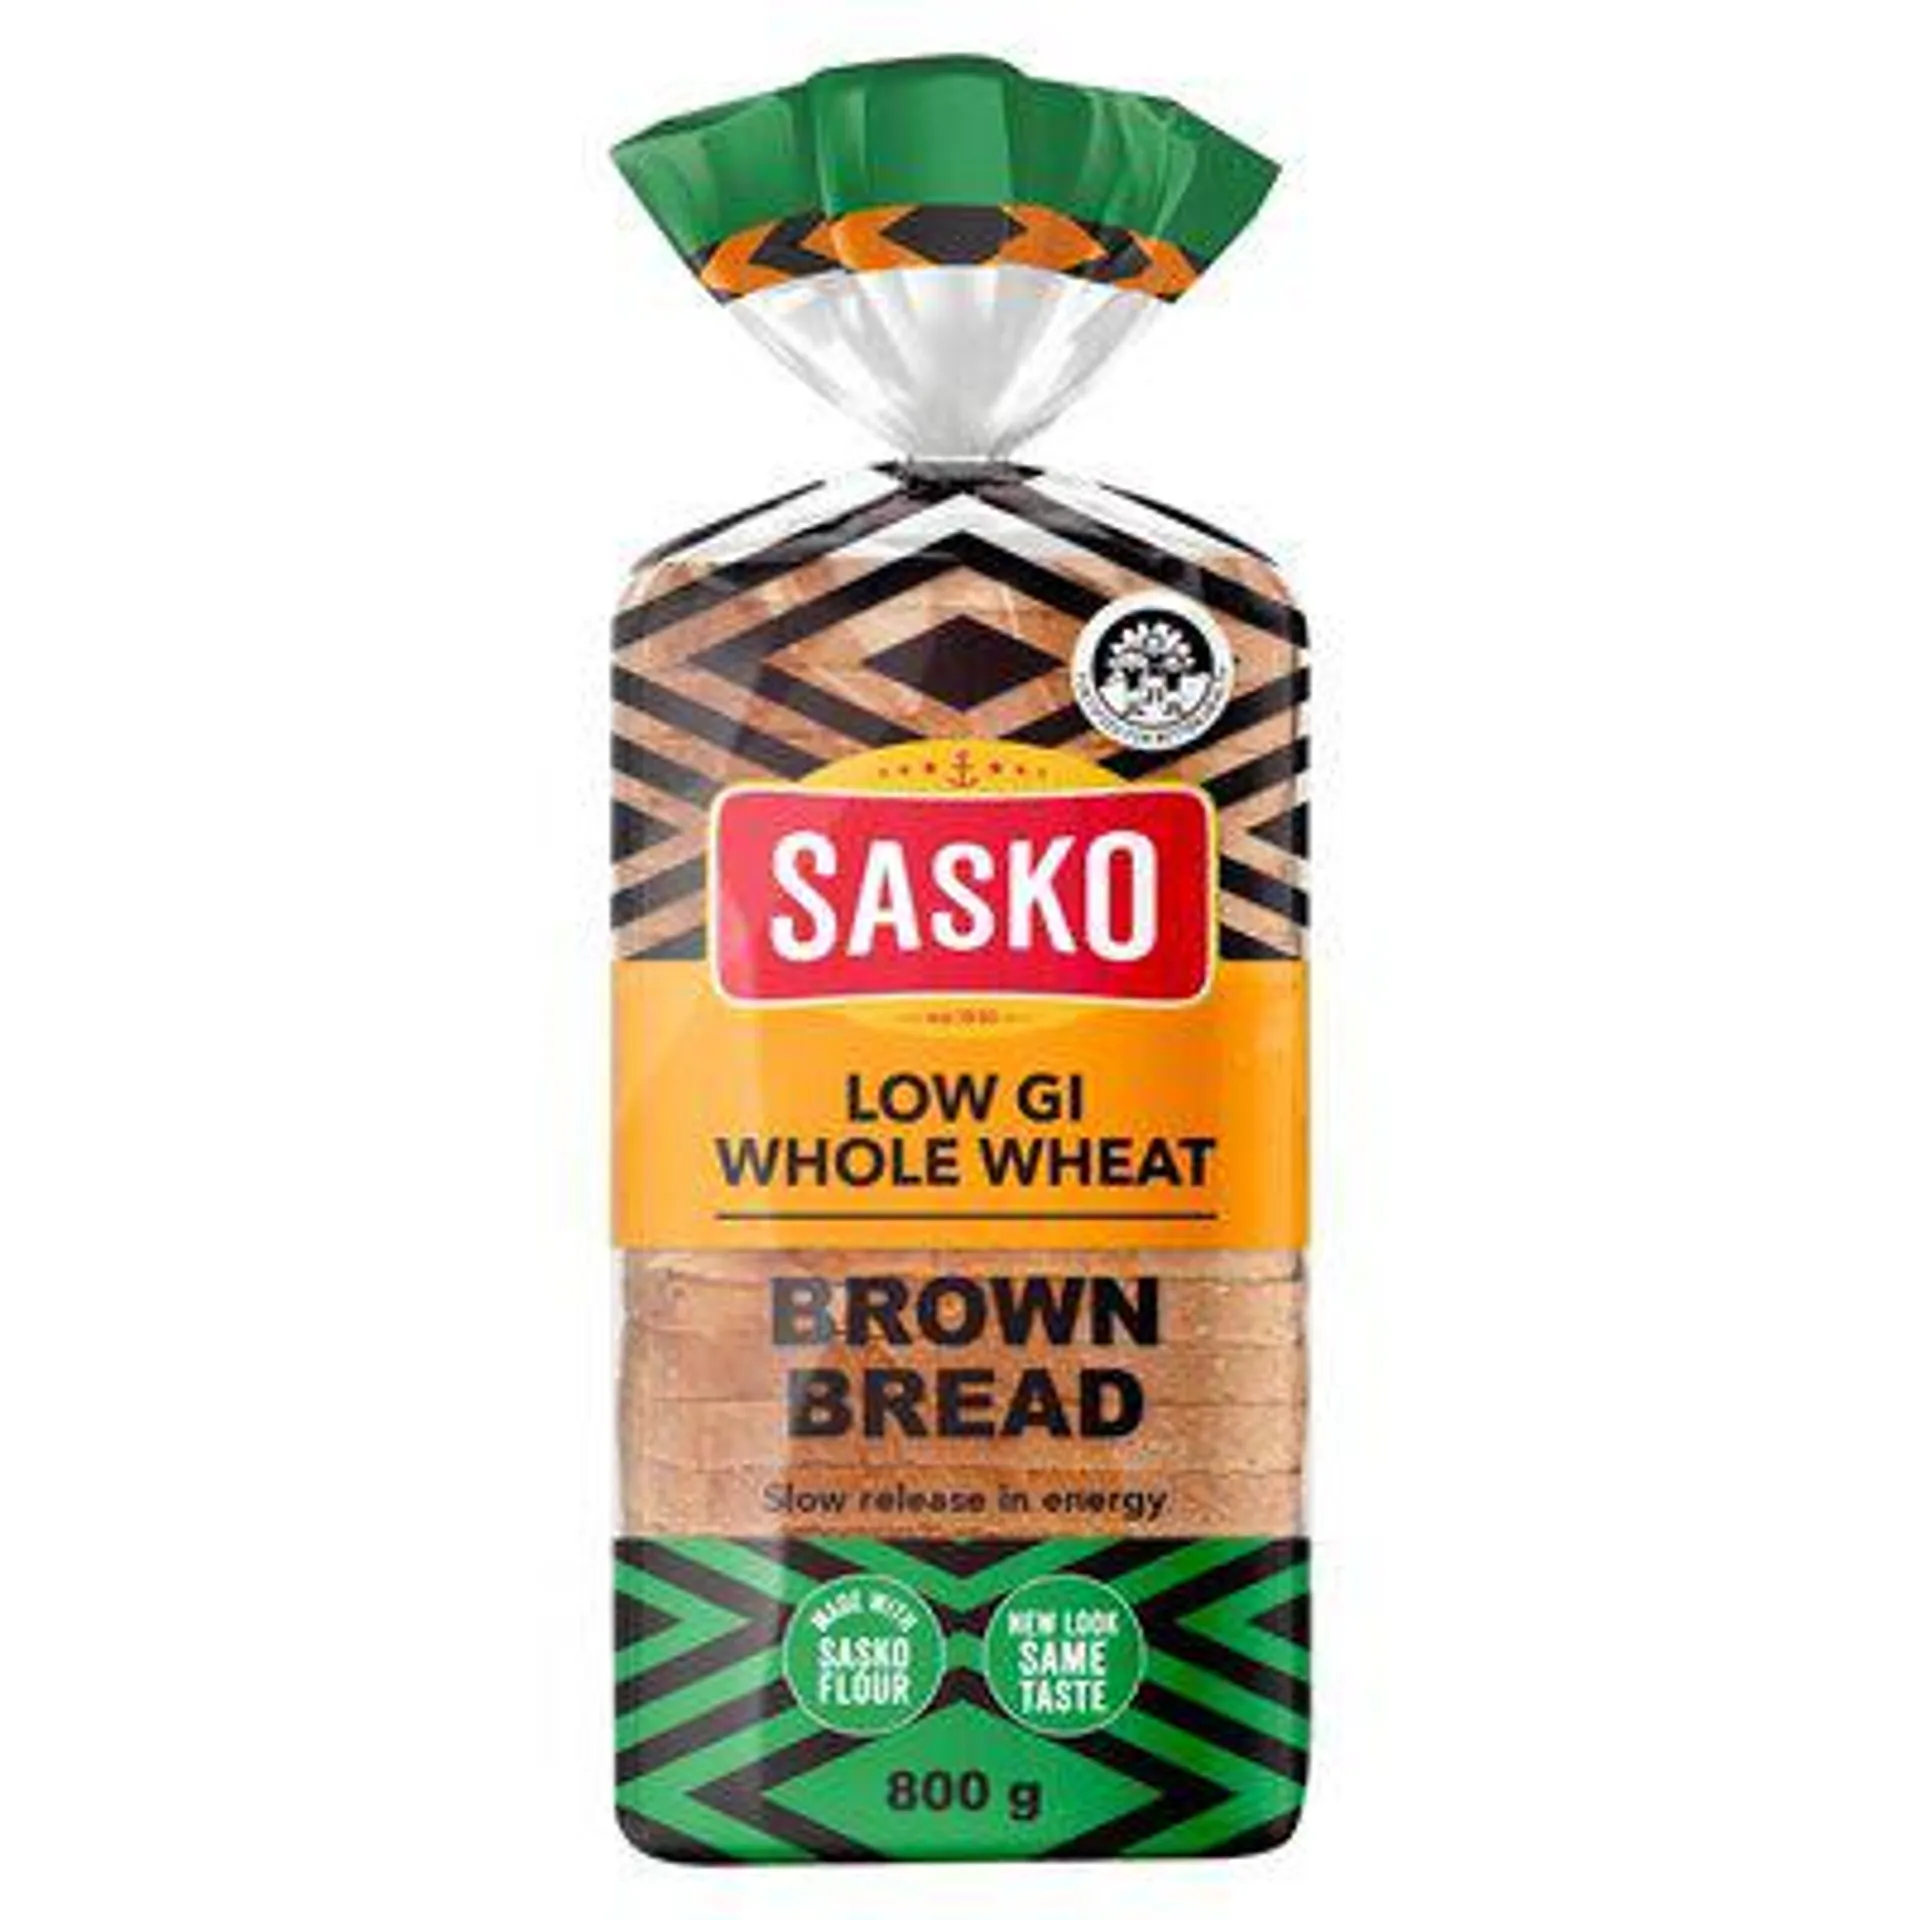 Sasko Low Gi Whole Wheat Brown Bread 800g